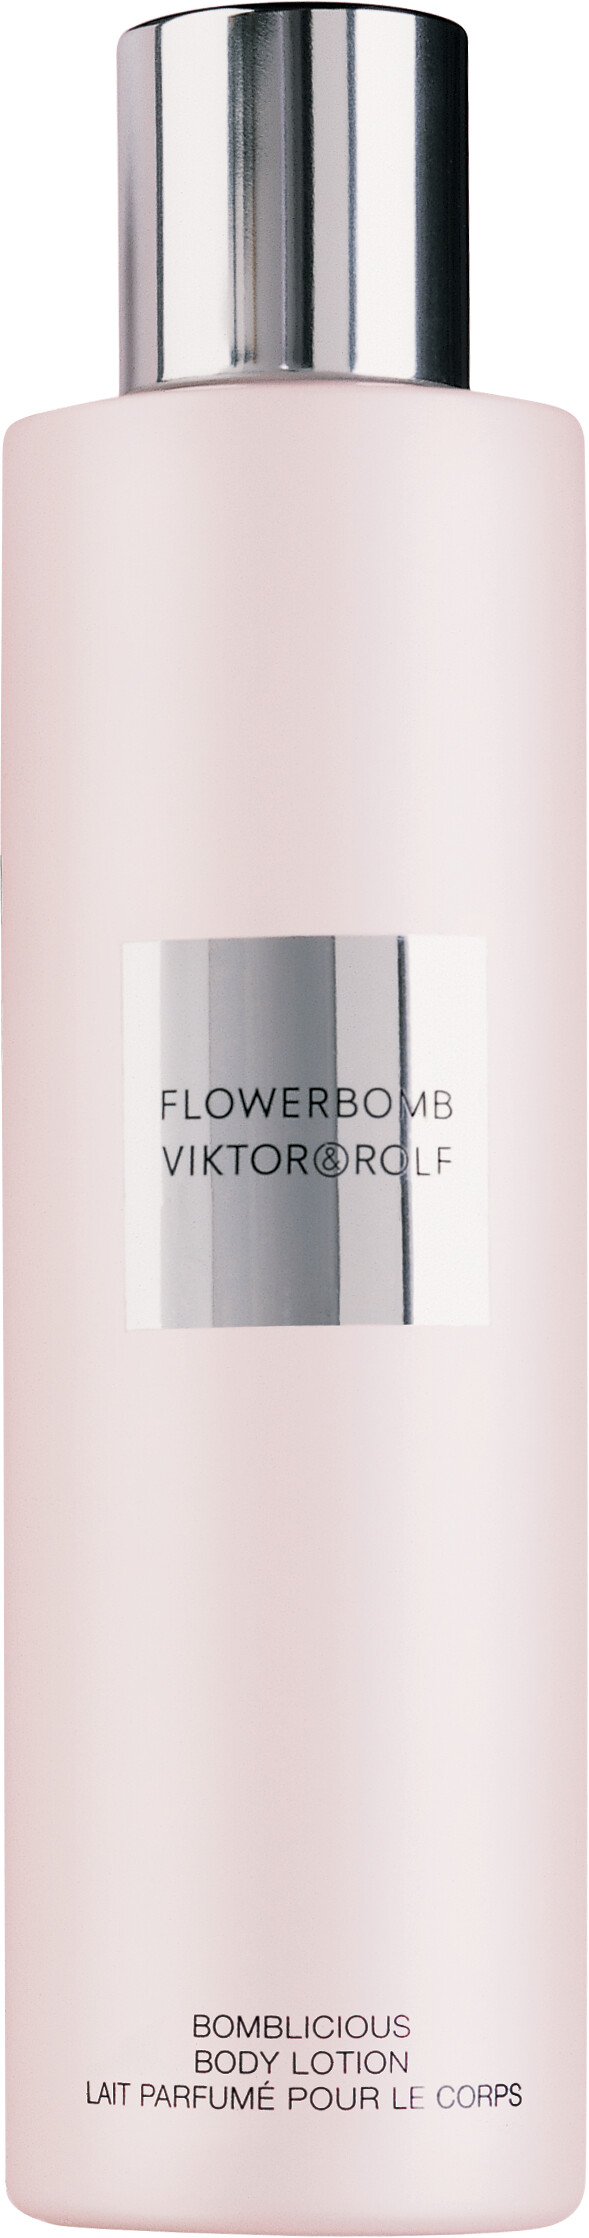 Viktor & Rolf Flowerbomb Perfumed Body Lotion 200ml